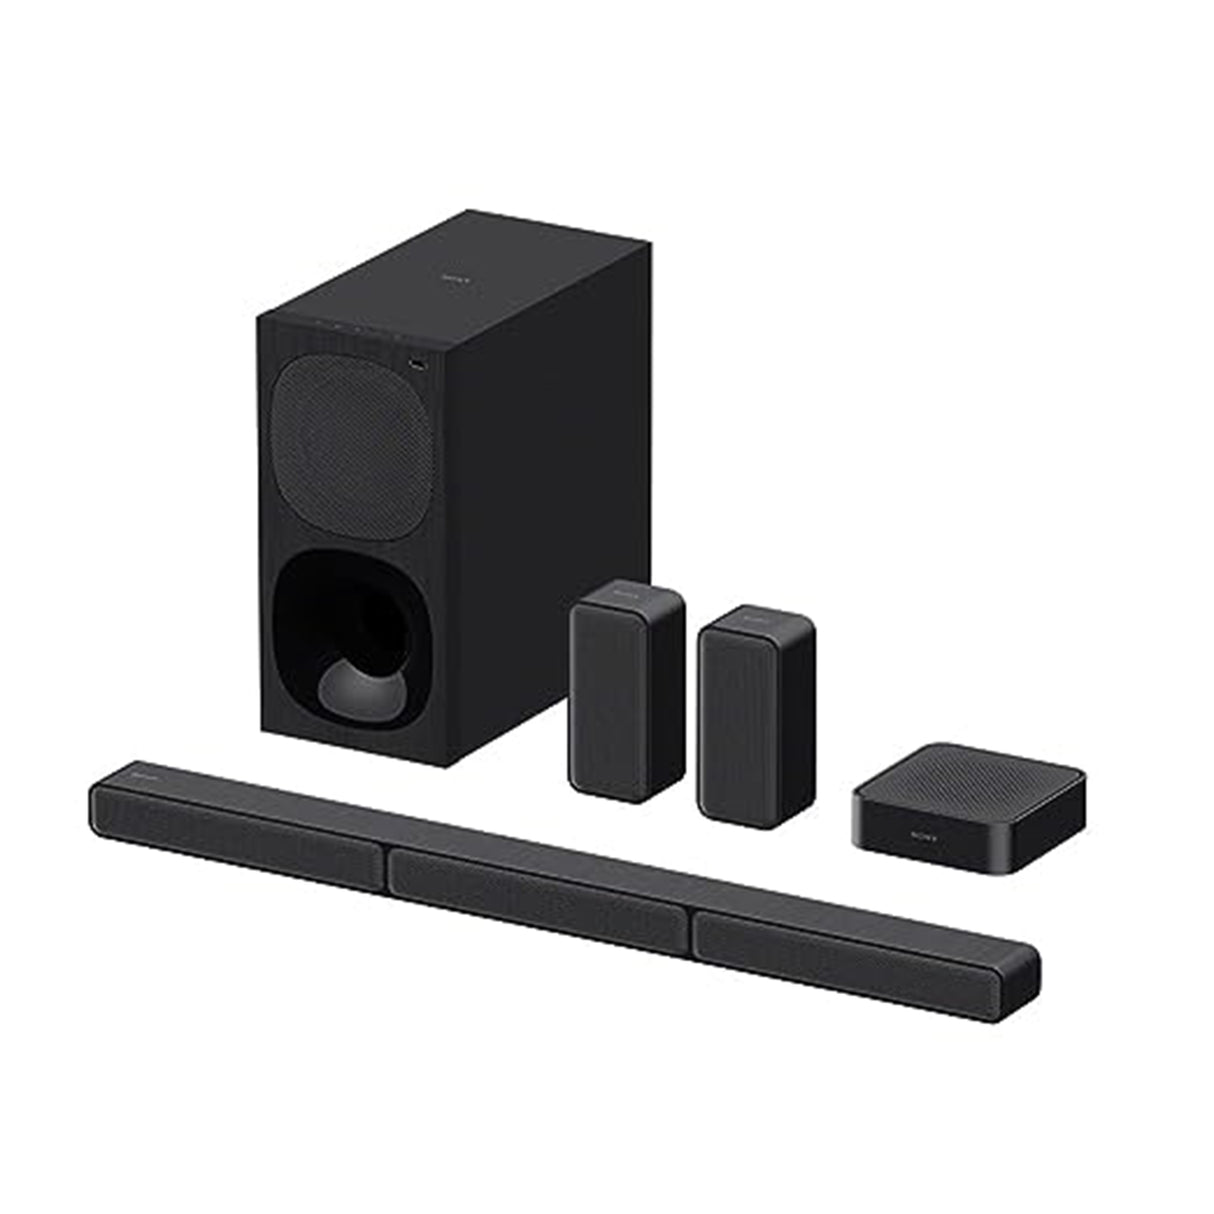 Sony HT-S40R Real - 5.1 channel Dolby Digital Soundbar with Subwoofer & Wireless Rear Speakers (Black)